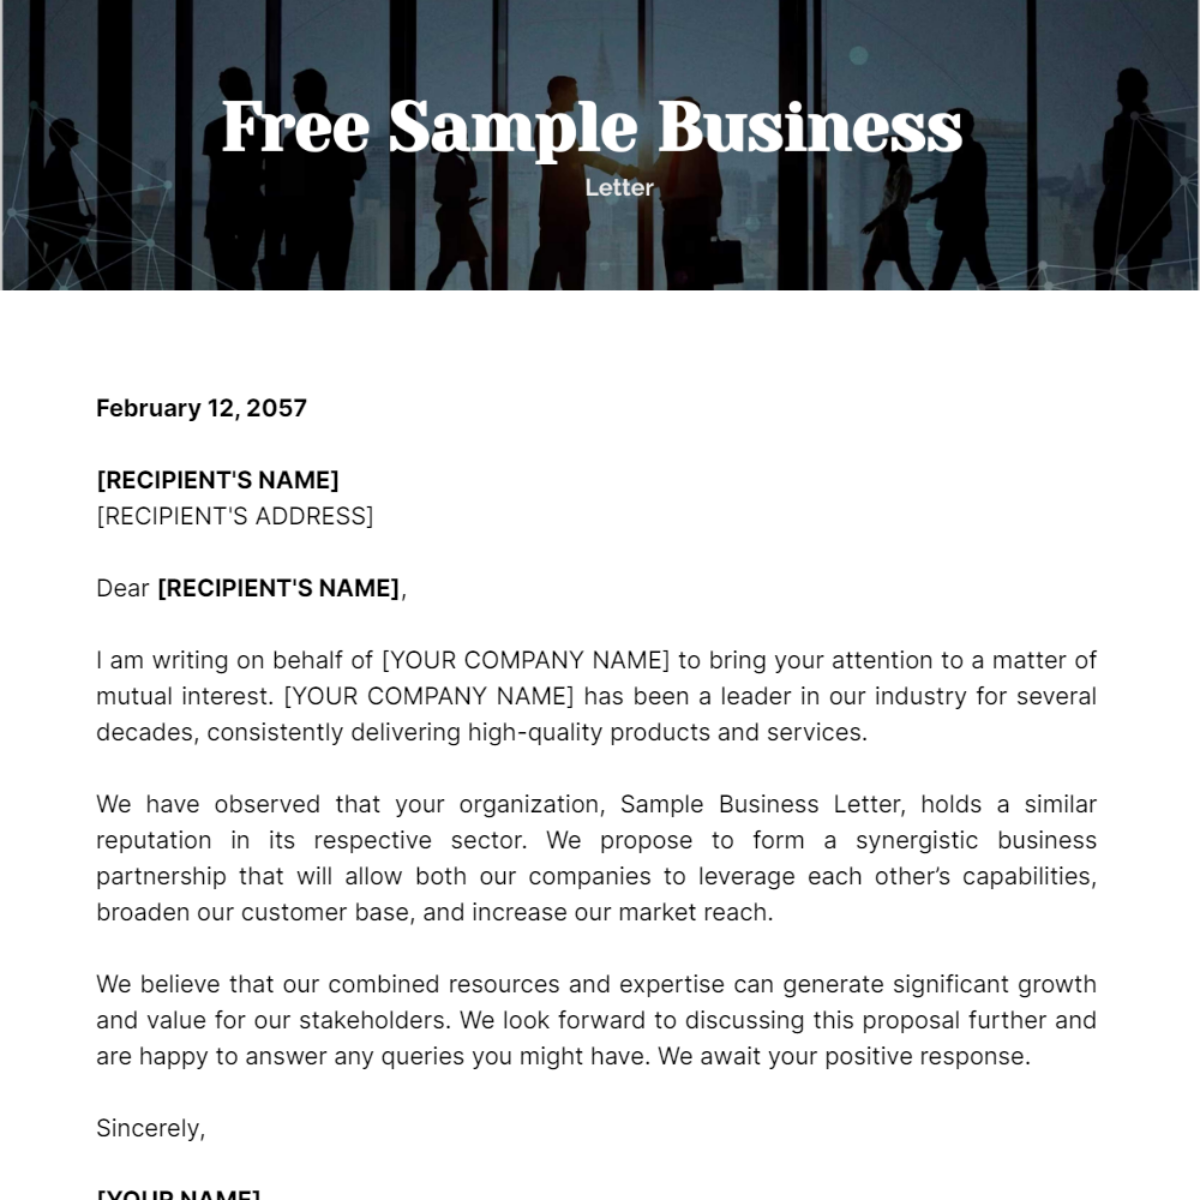 Sample Business Letter Template